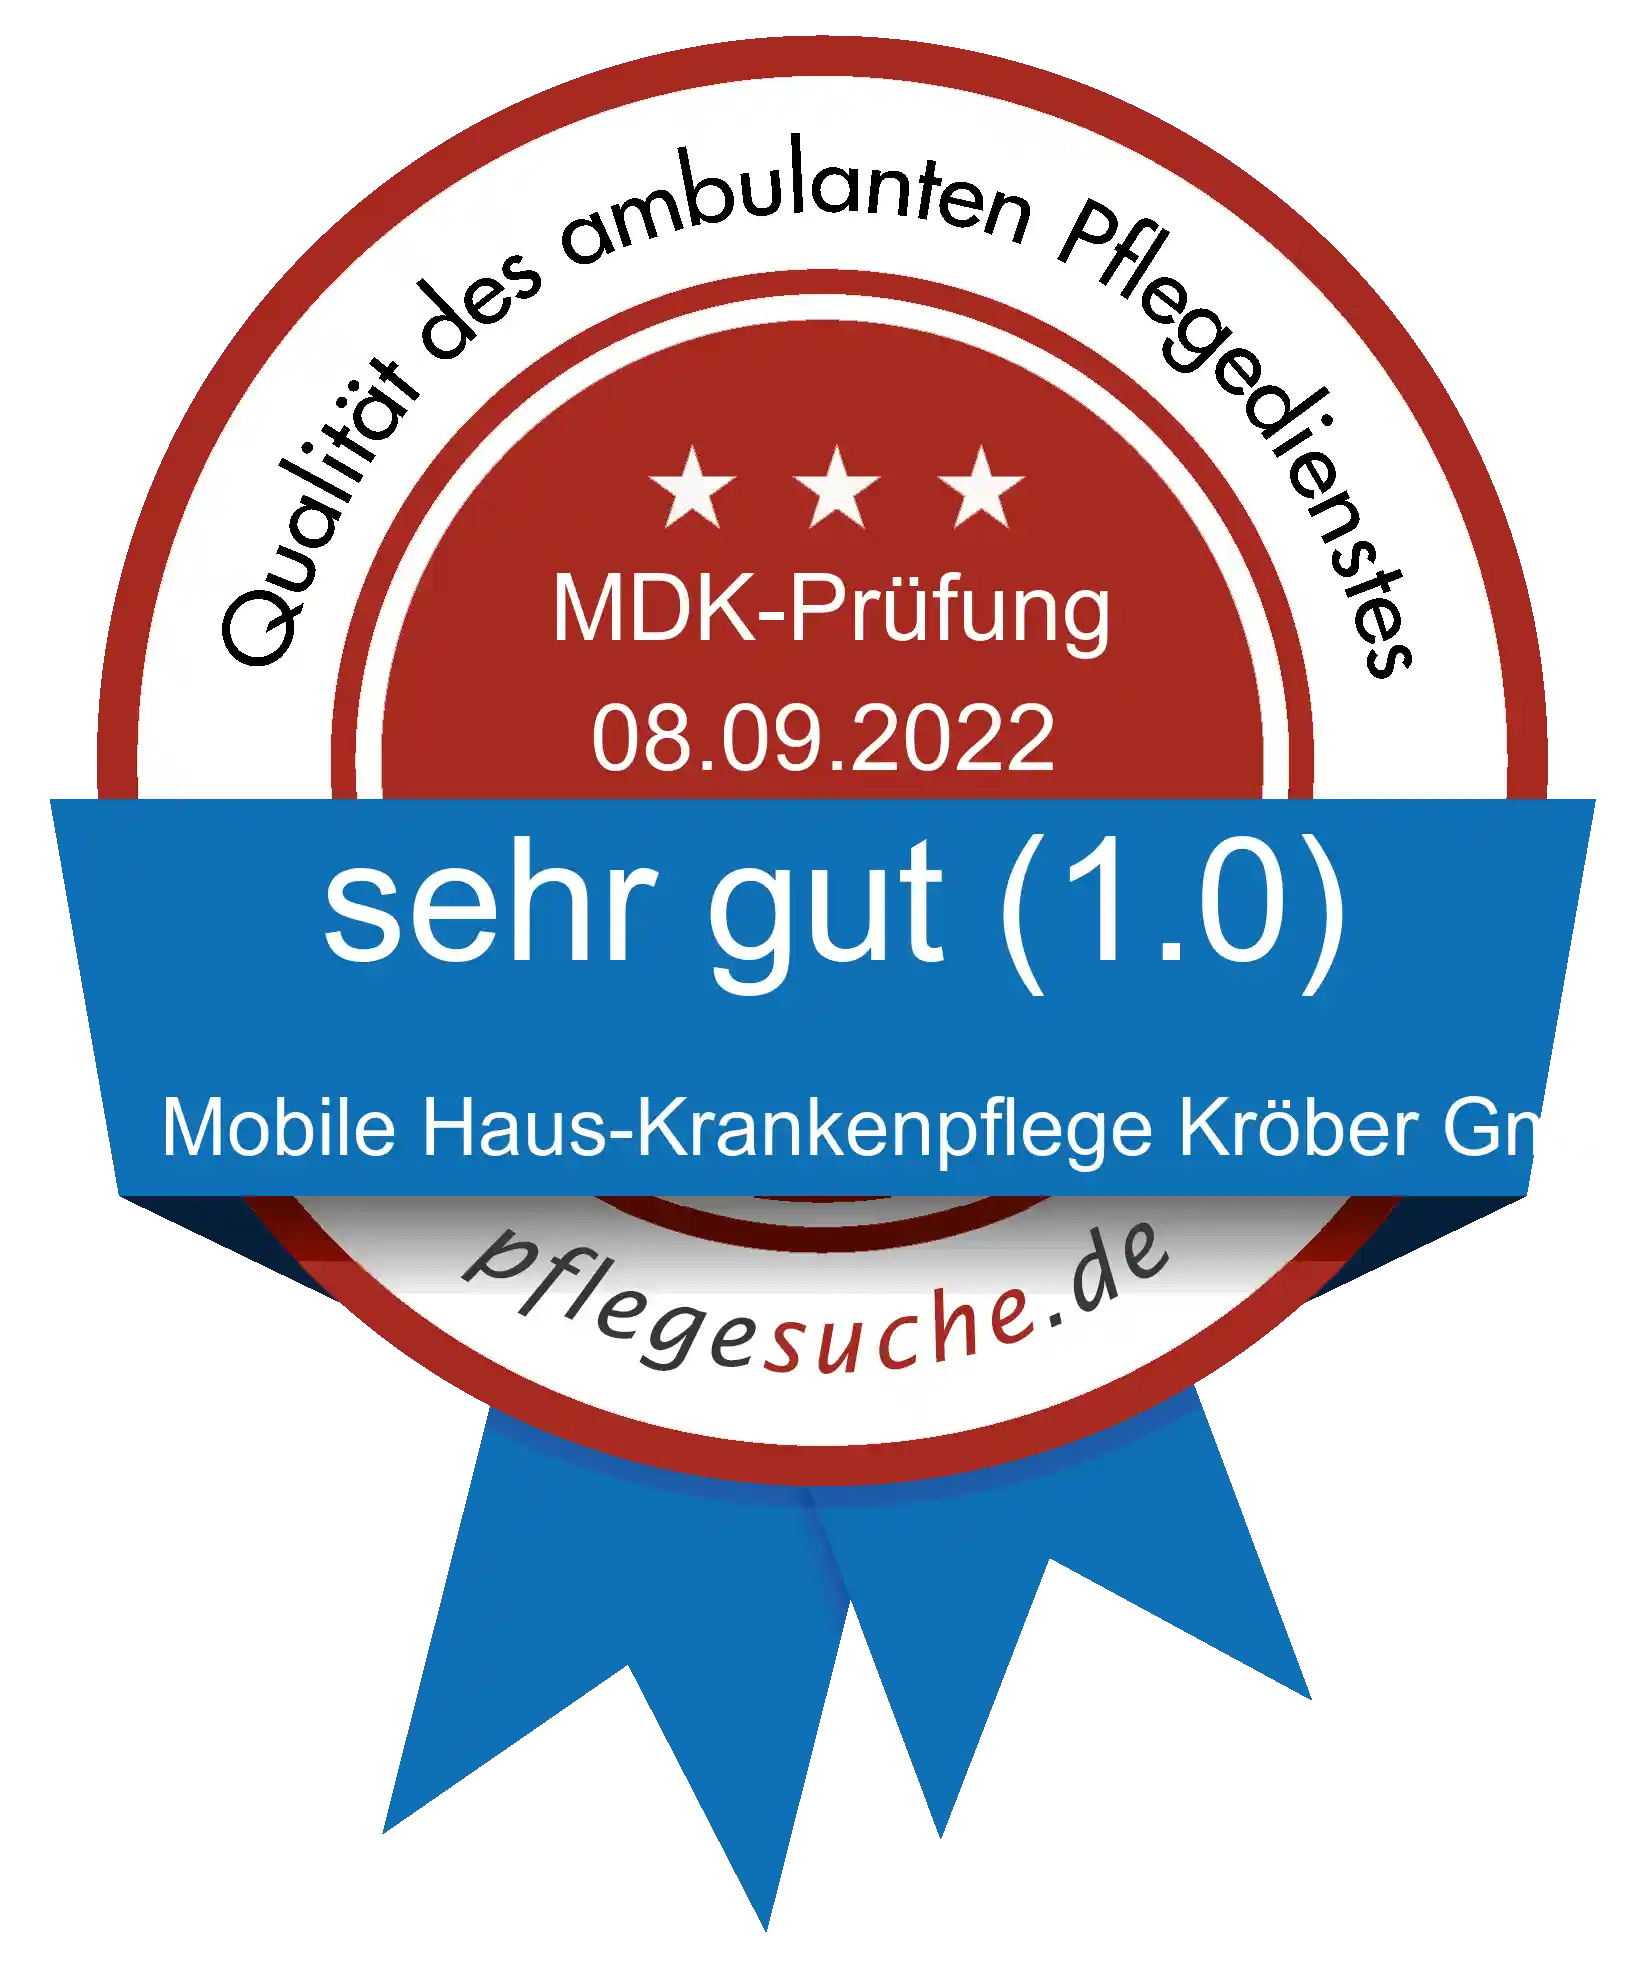 Siegel Benotung: Mobile Haus-Krankenpflege Kröber GmbH